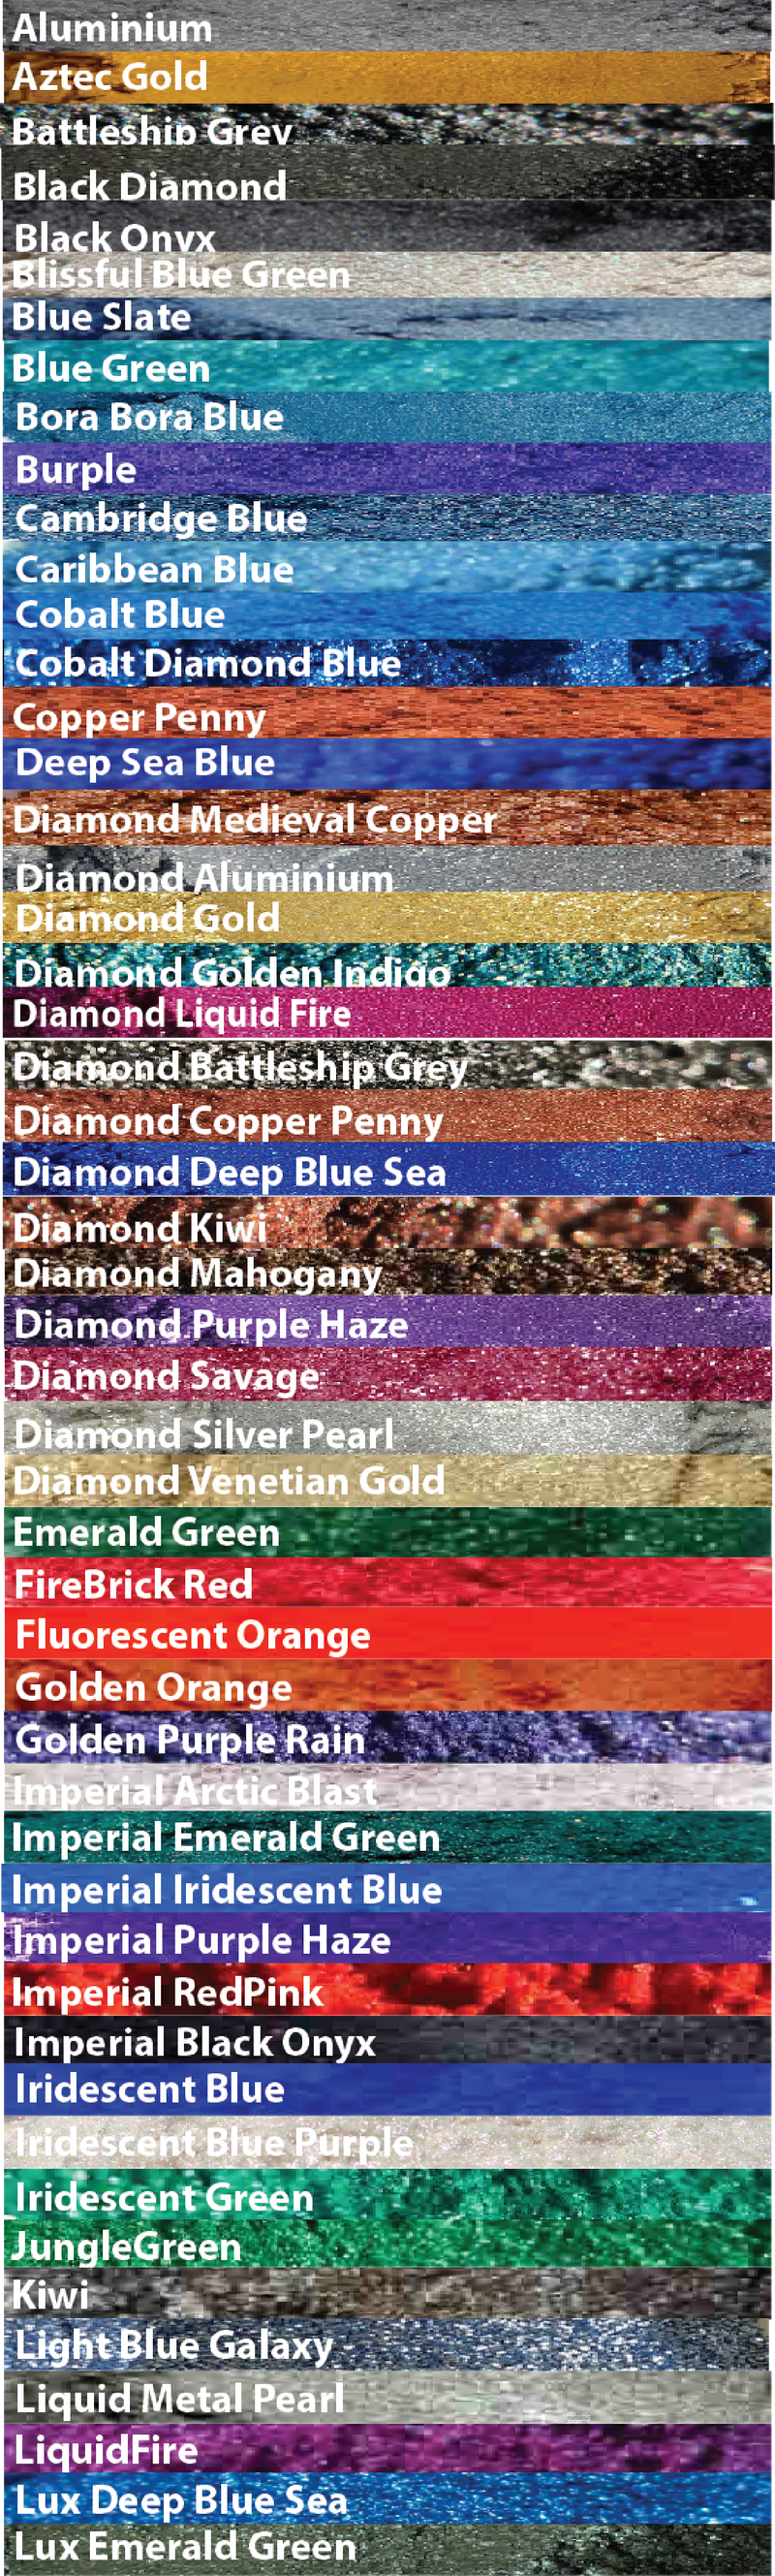 42g "PURE GOLD" Make-A-Wish Black Diamond Pigments